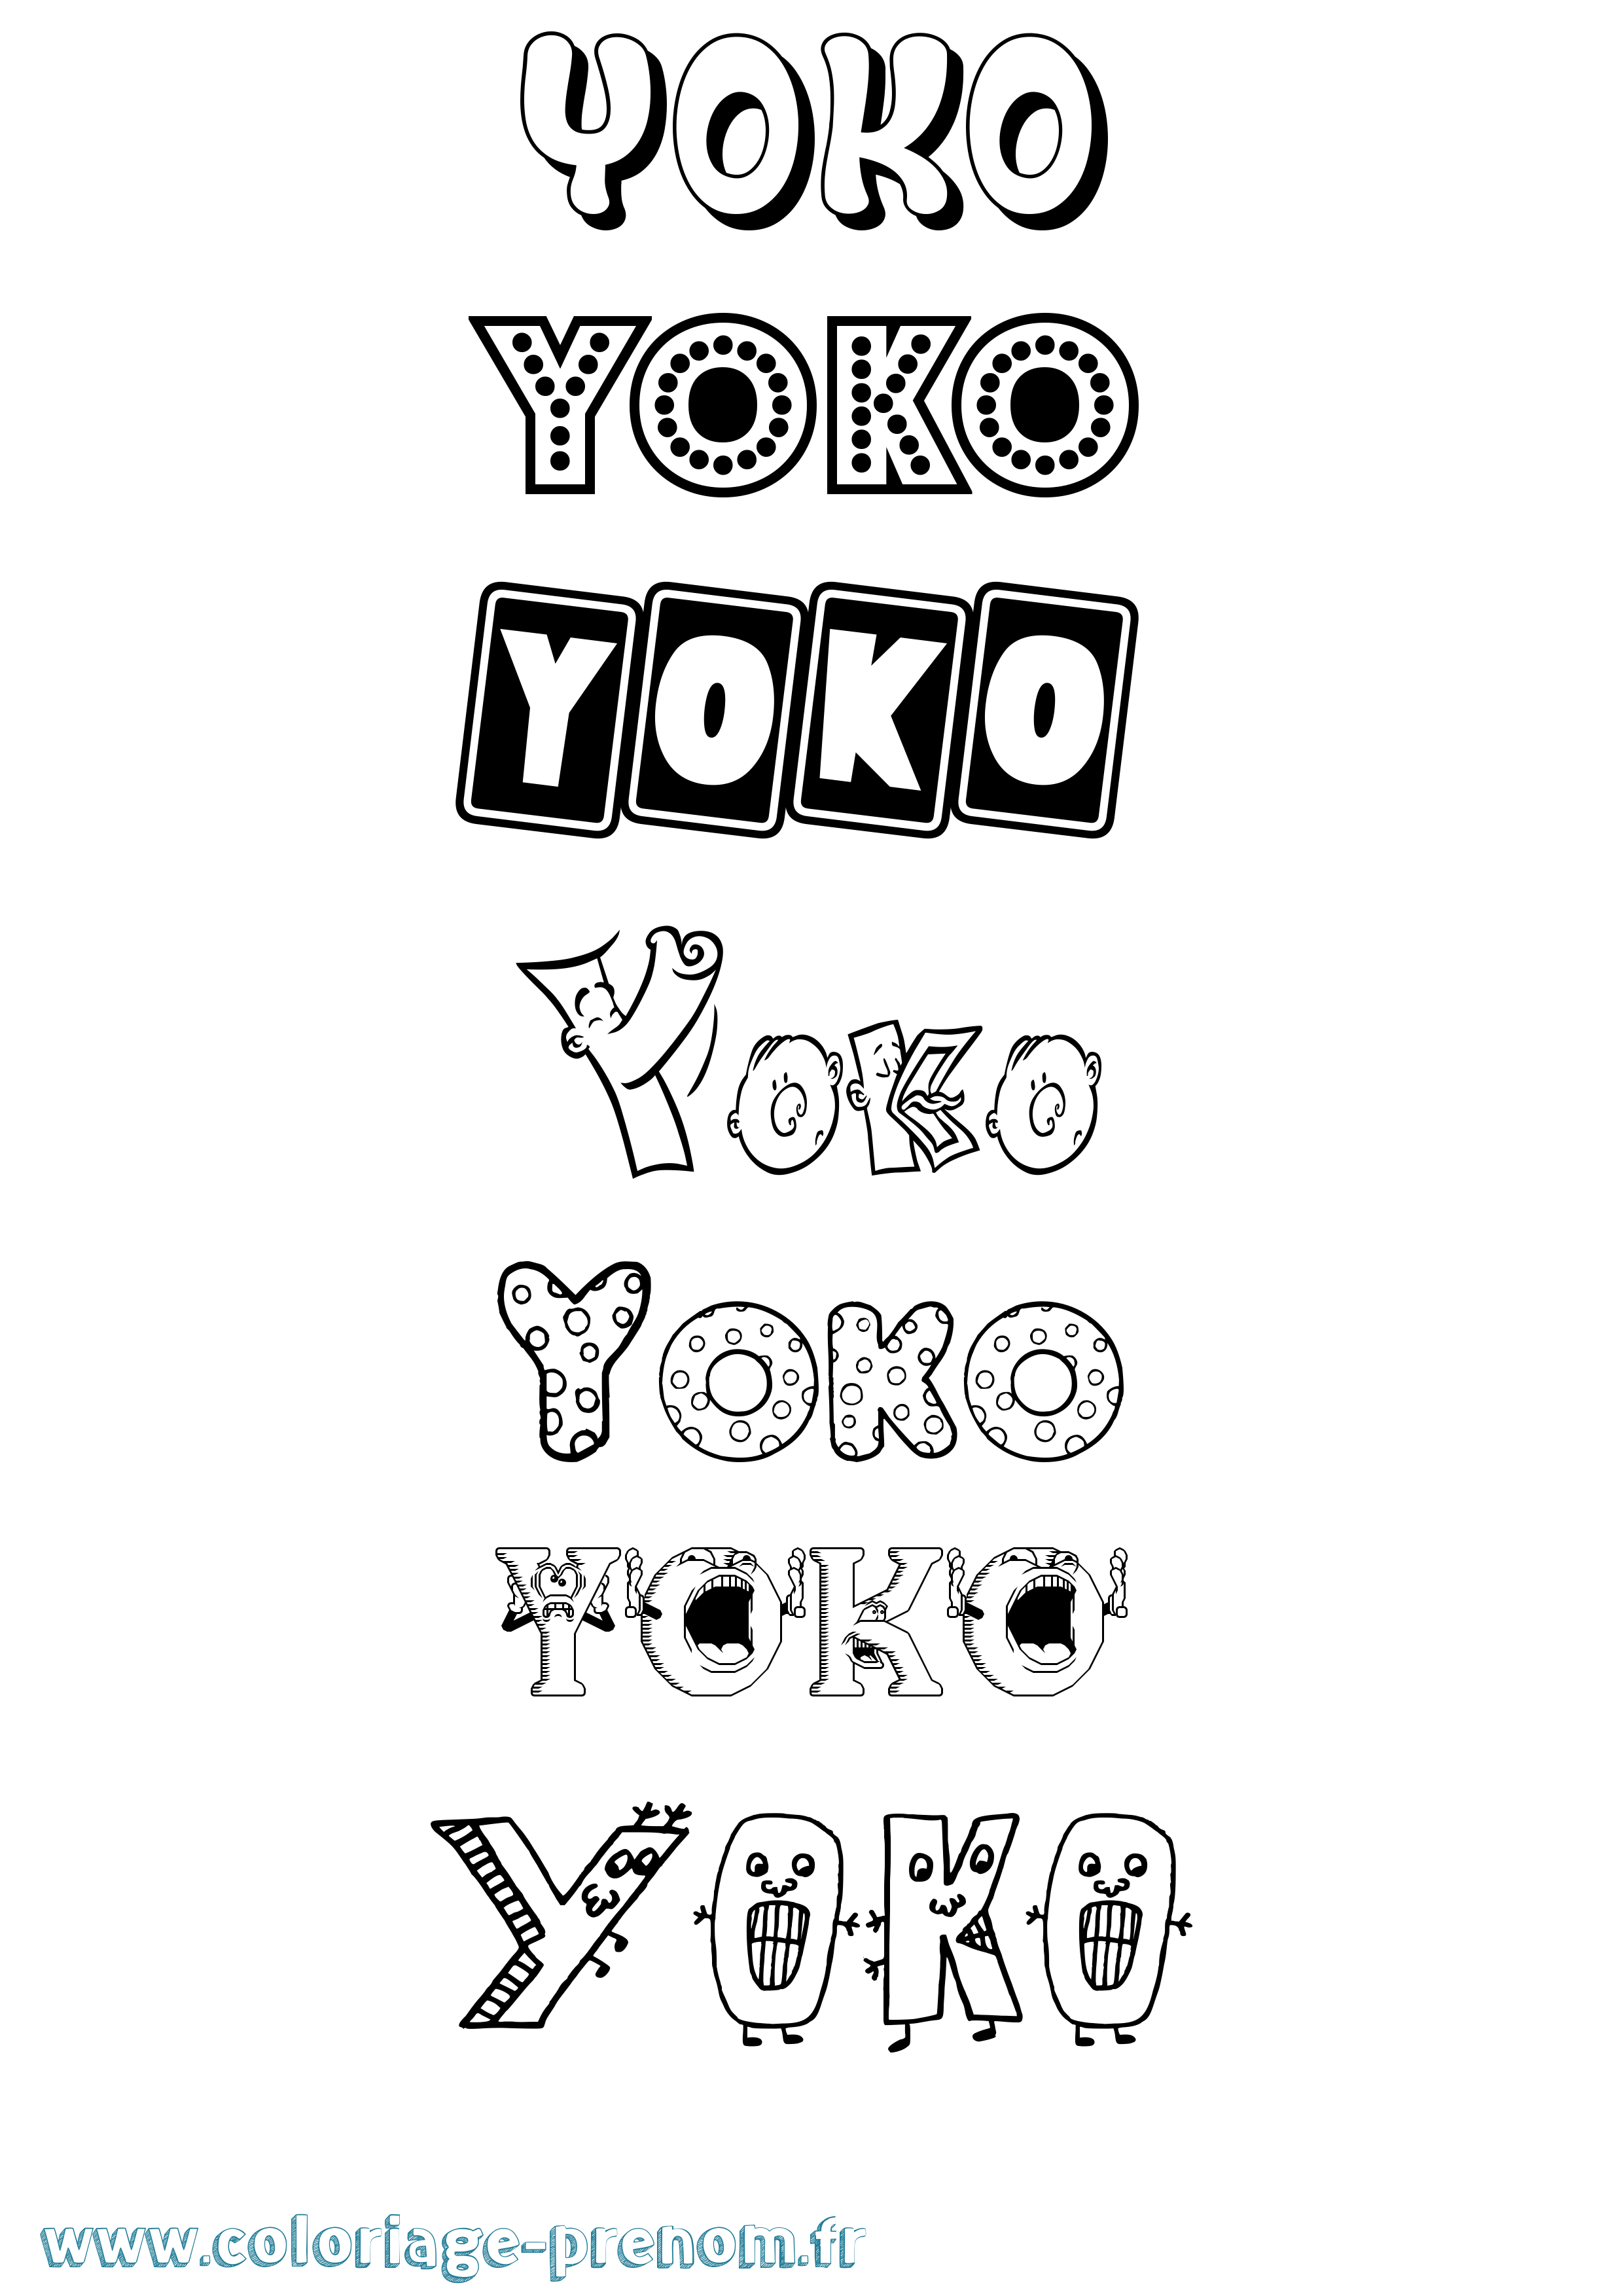 Coloriage prénom Yoko Fun